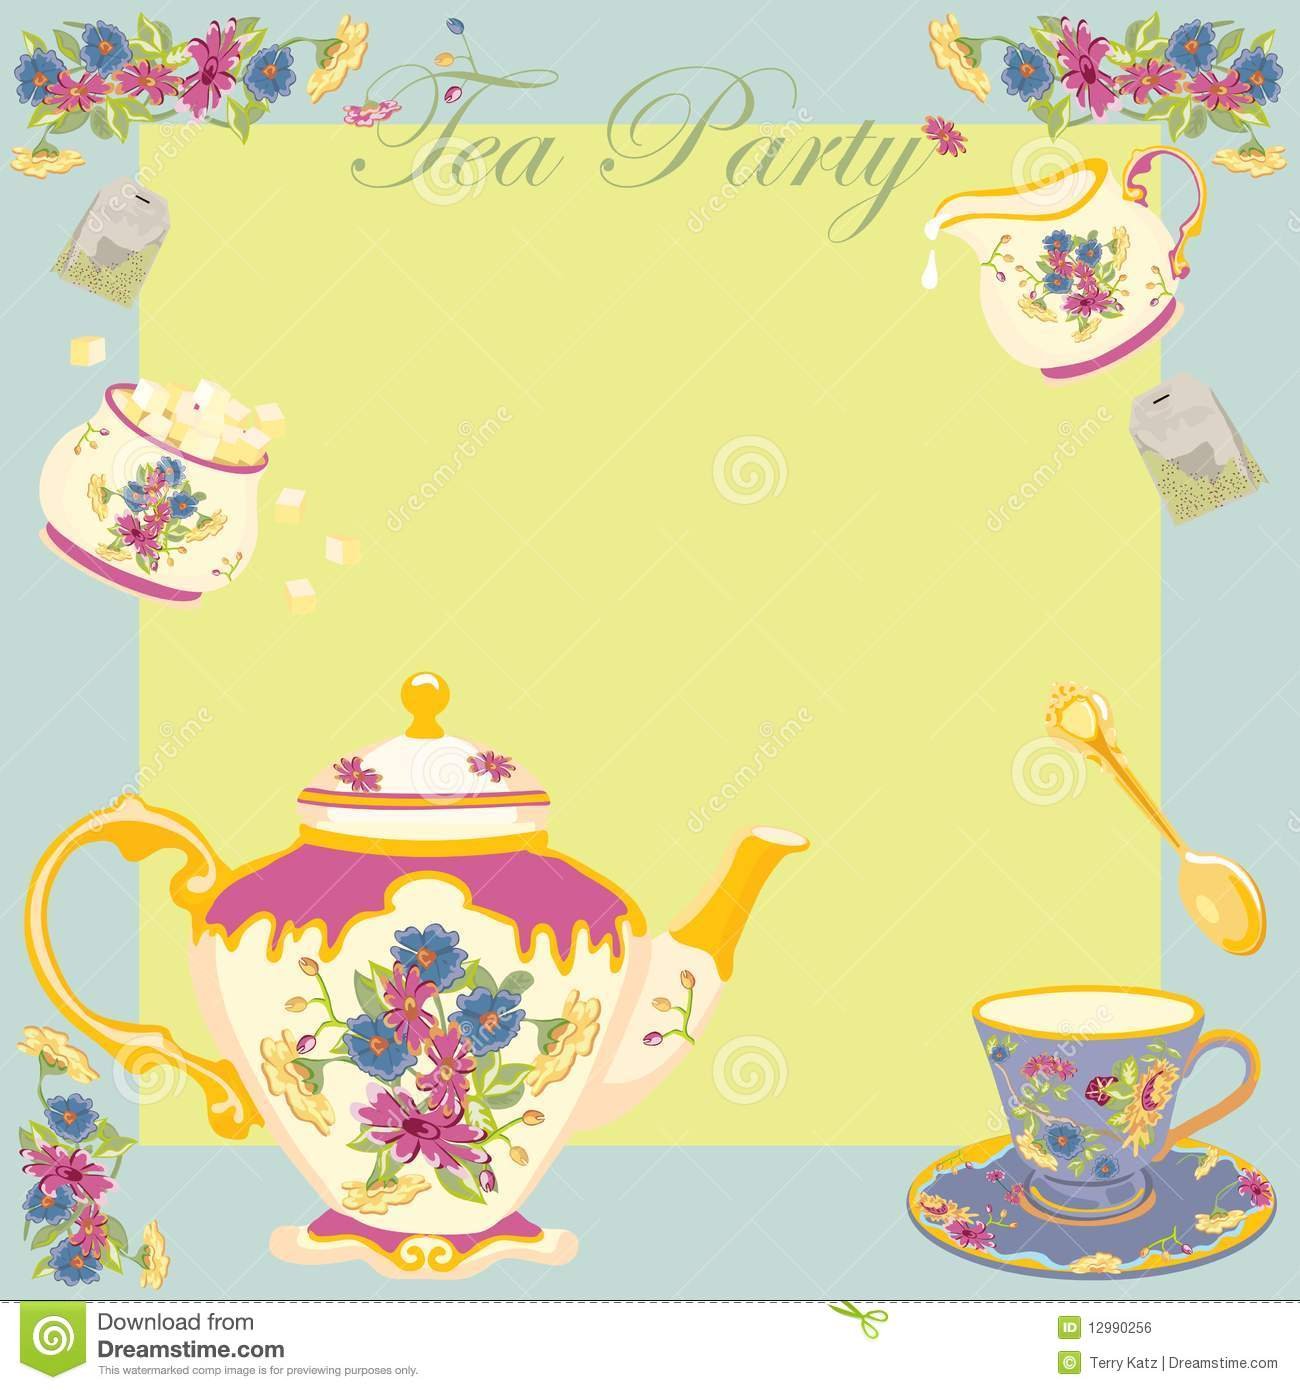 Victorian Tea Party Invitation Royalty Free Stock Image